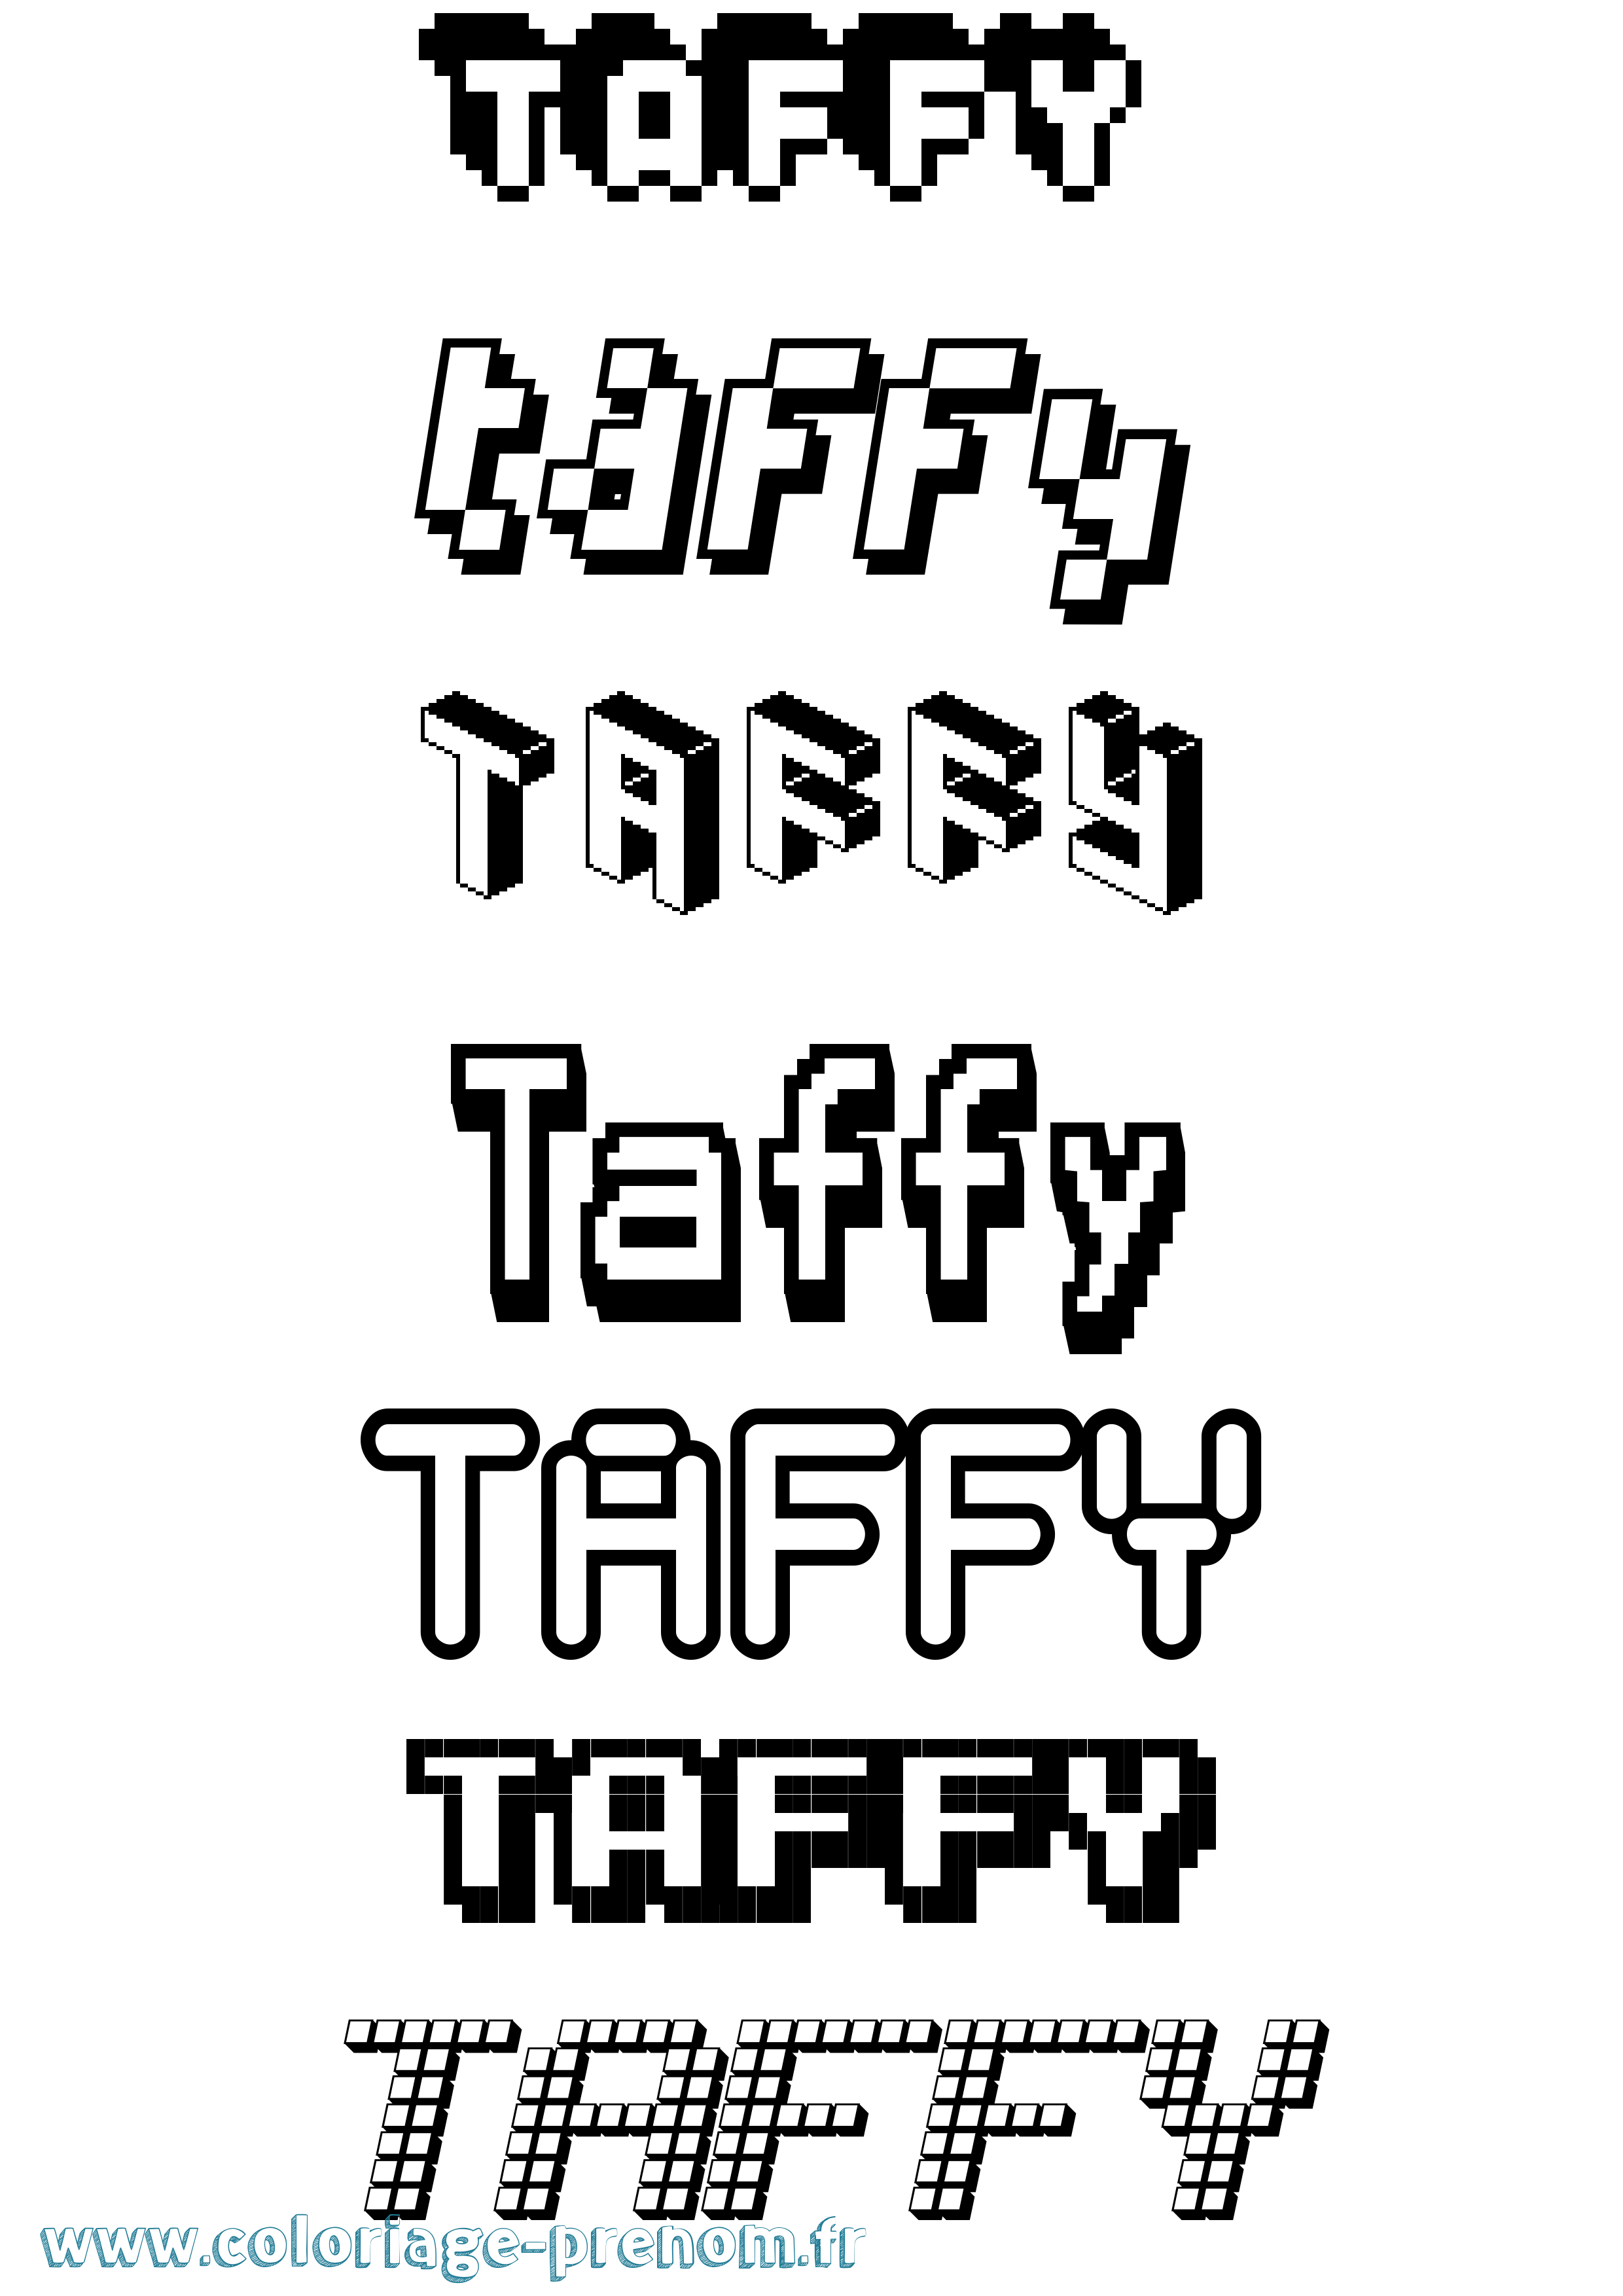 Coloriage prénom Taffy Pixel